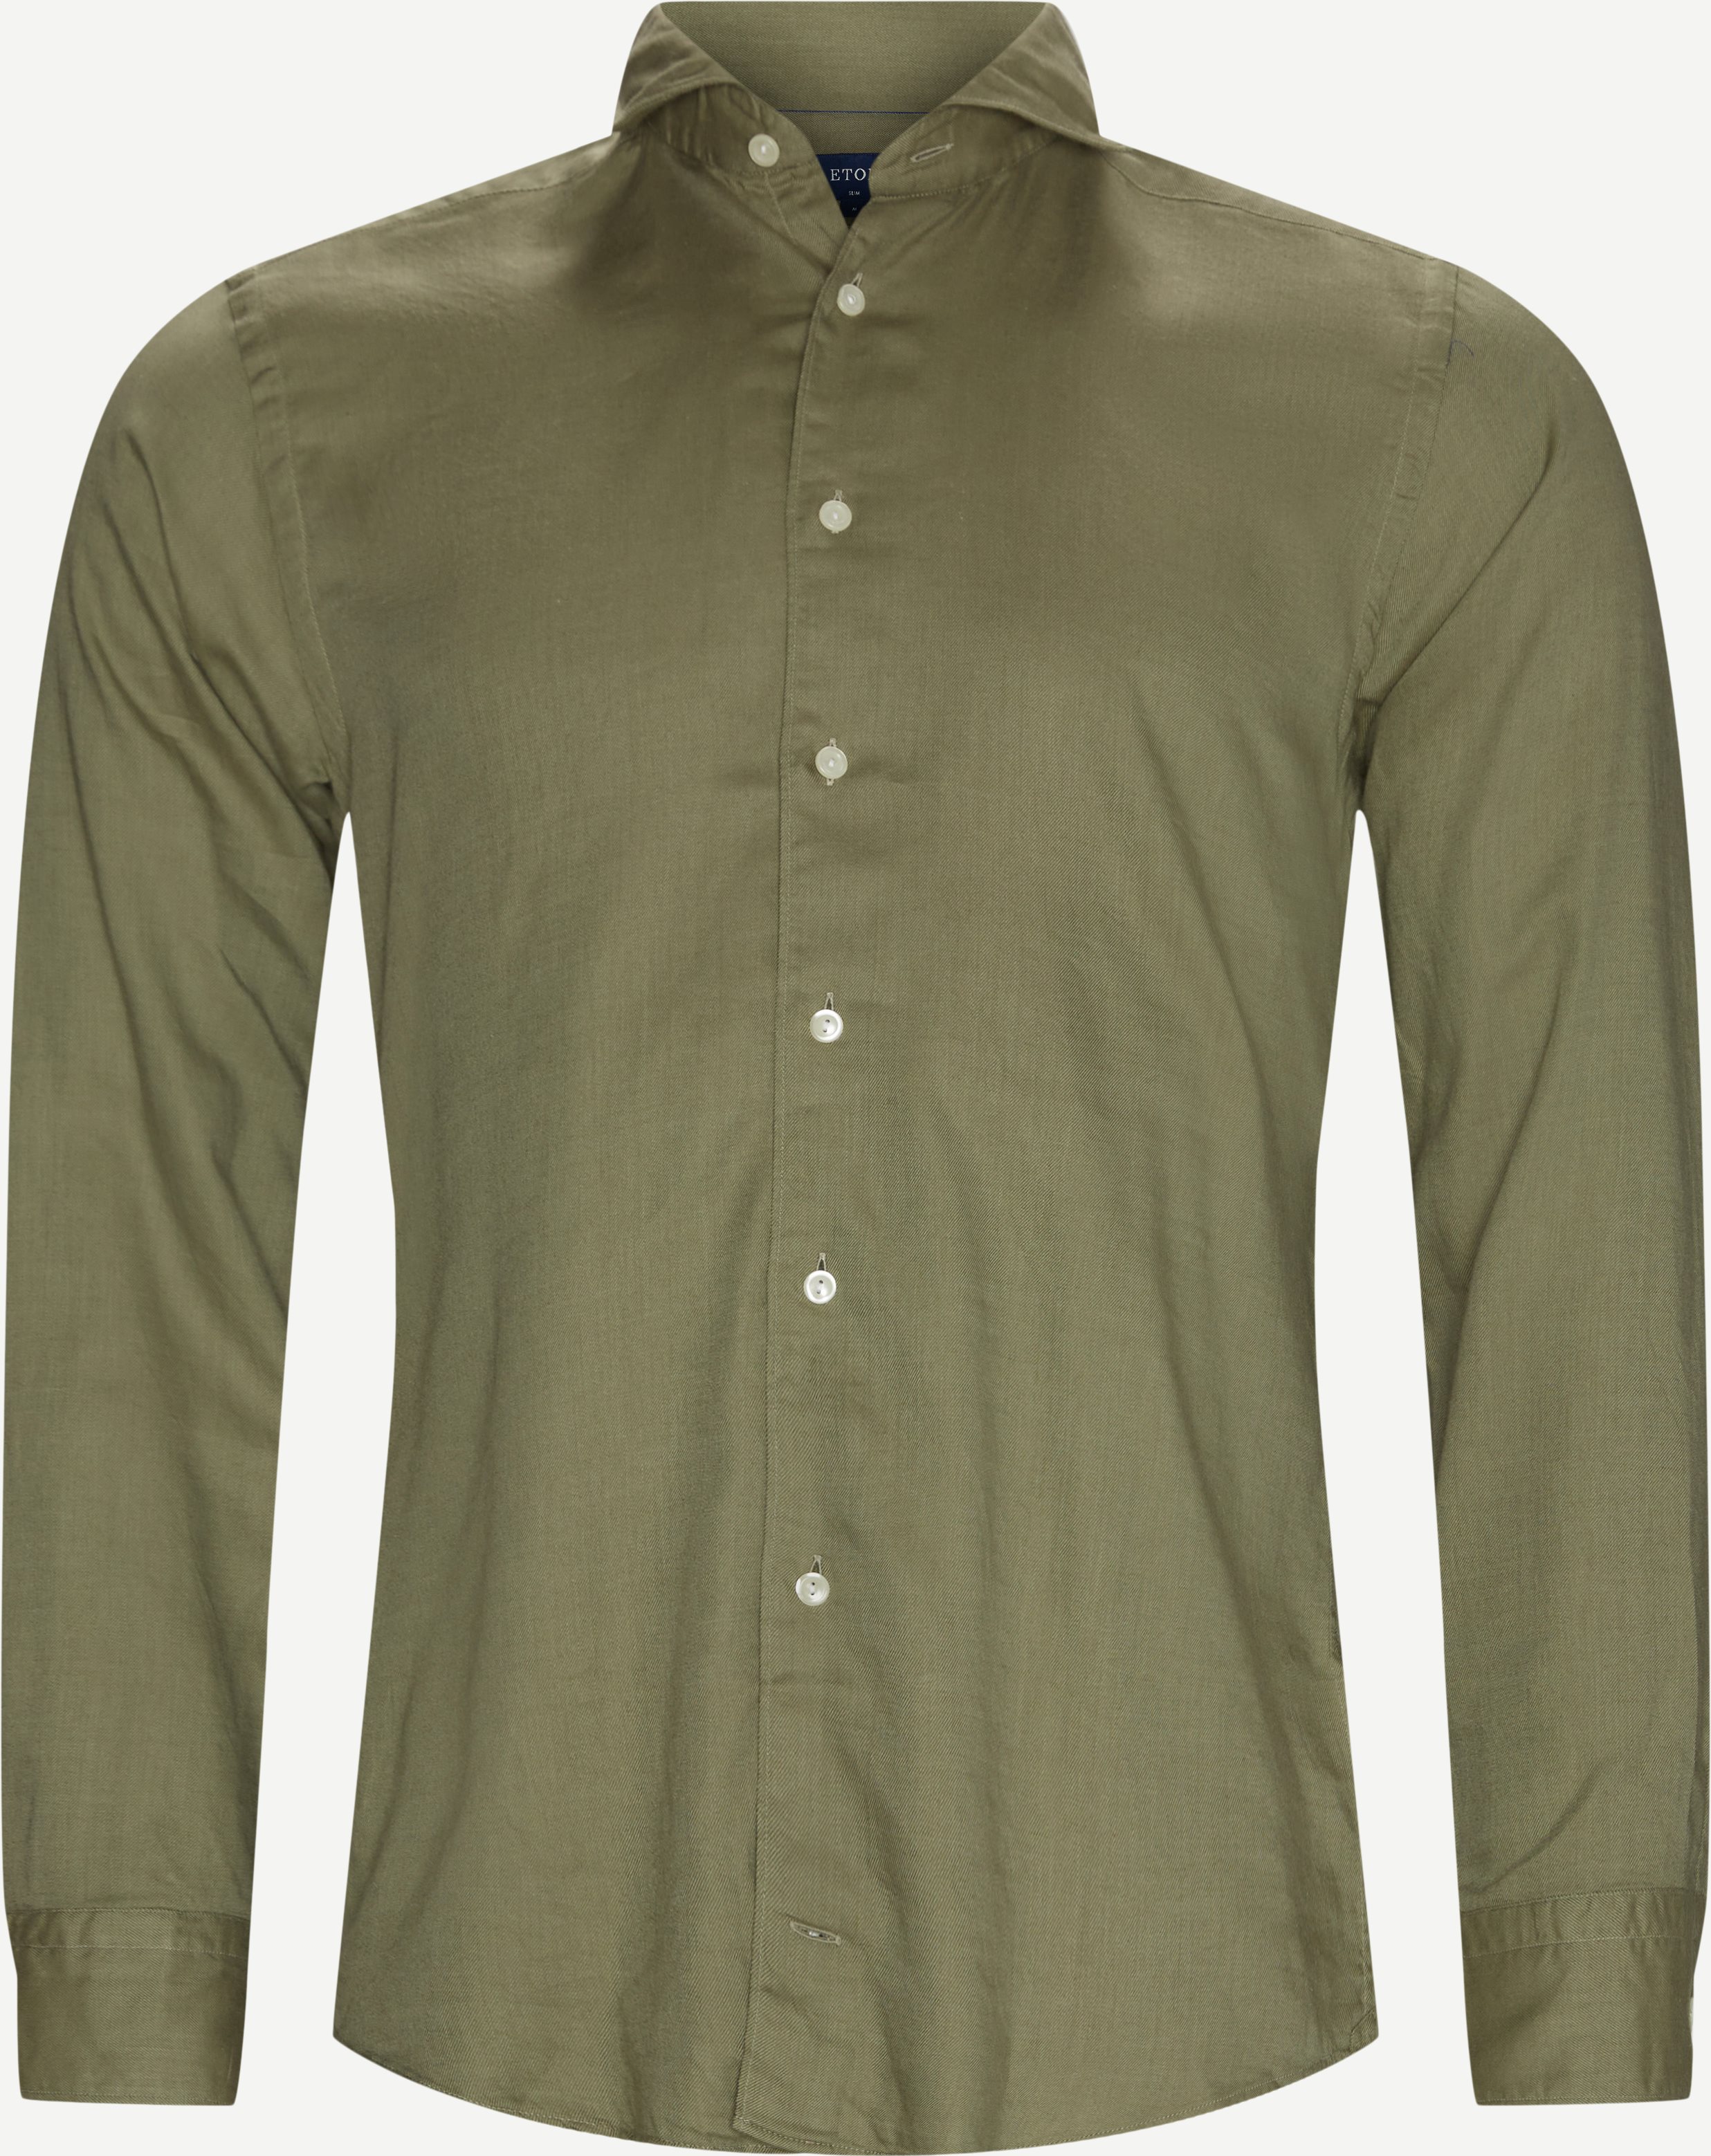 Cotton – Tencel Soft Shirt - Shirts - Army